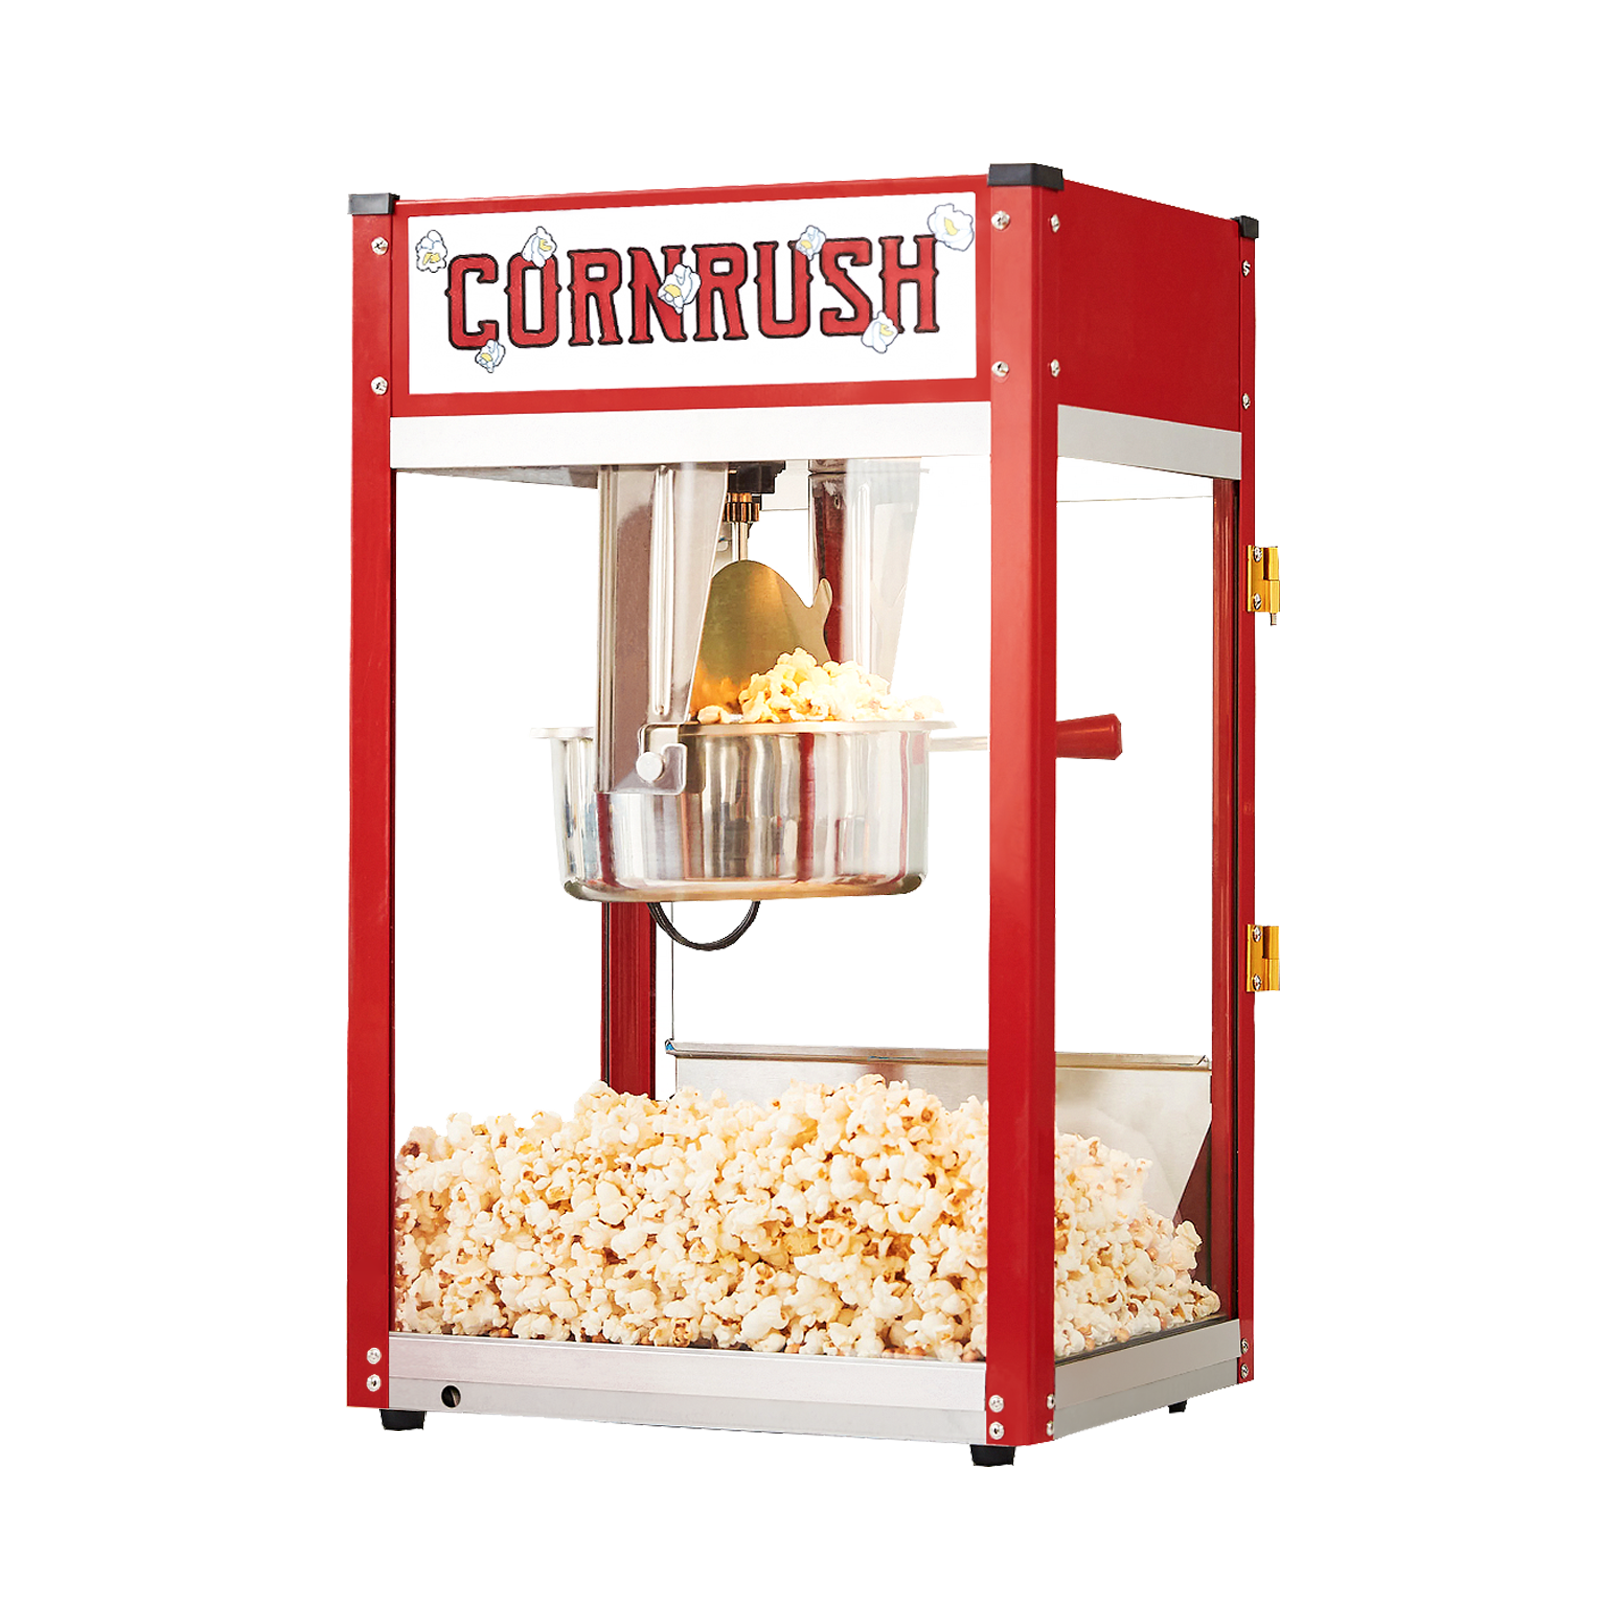 Corn rush popcorn machine with 3 candy dispenser & cart, 8oz - red